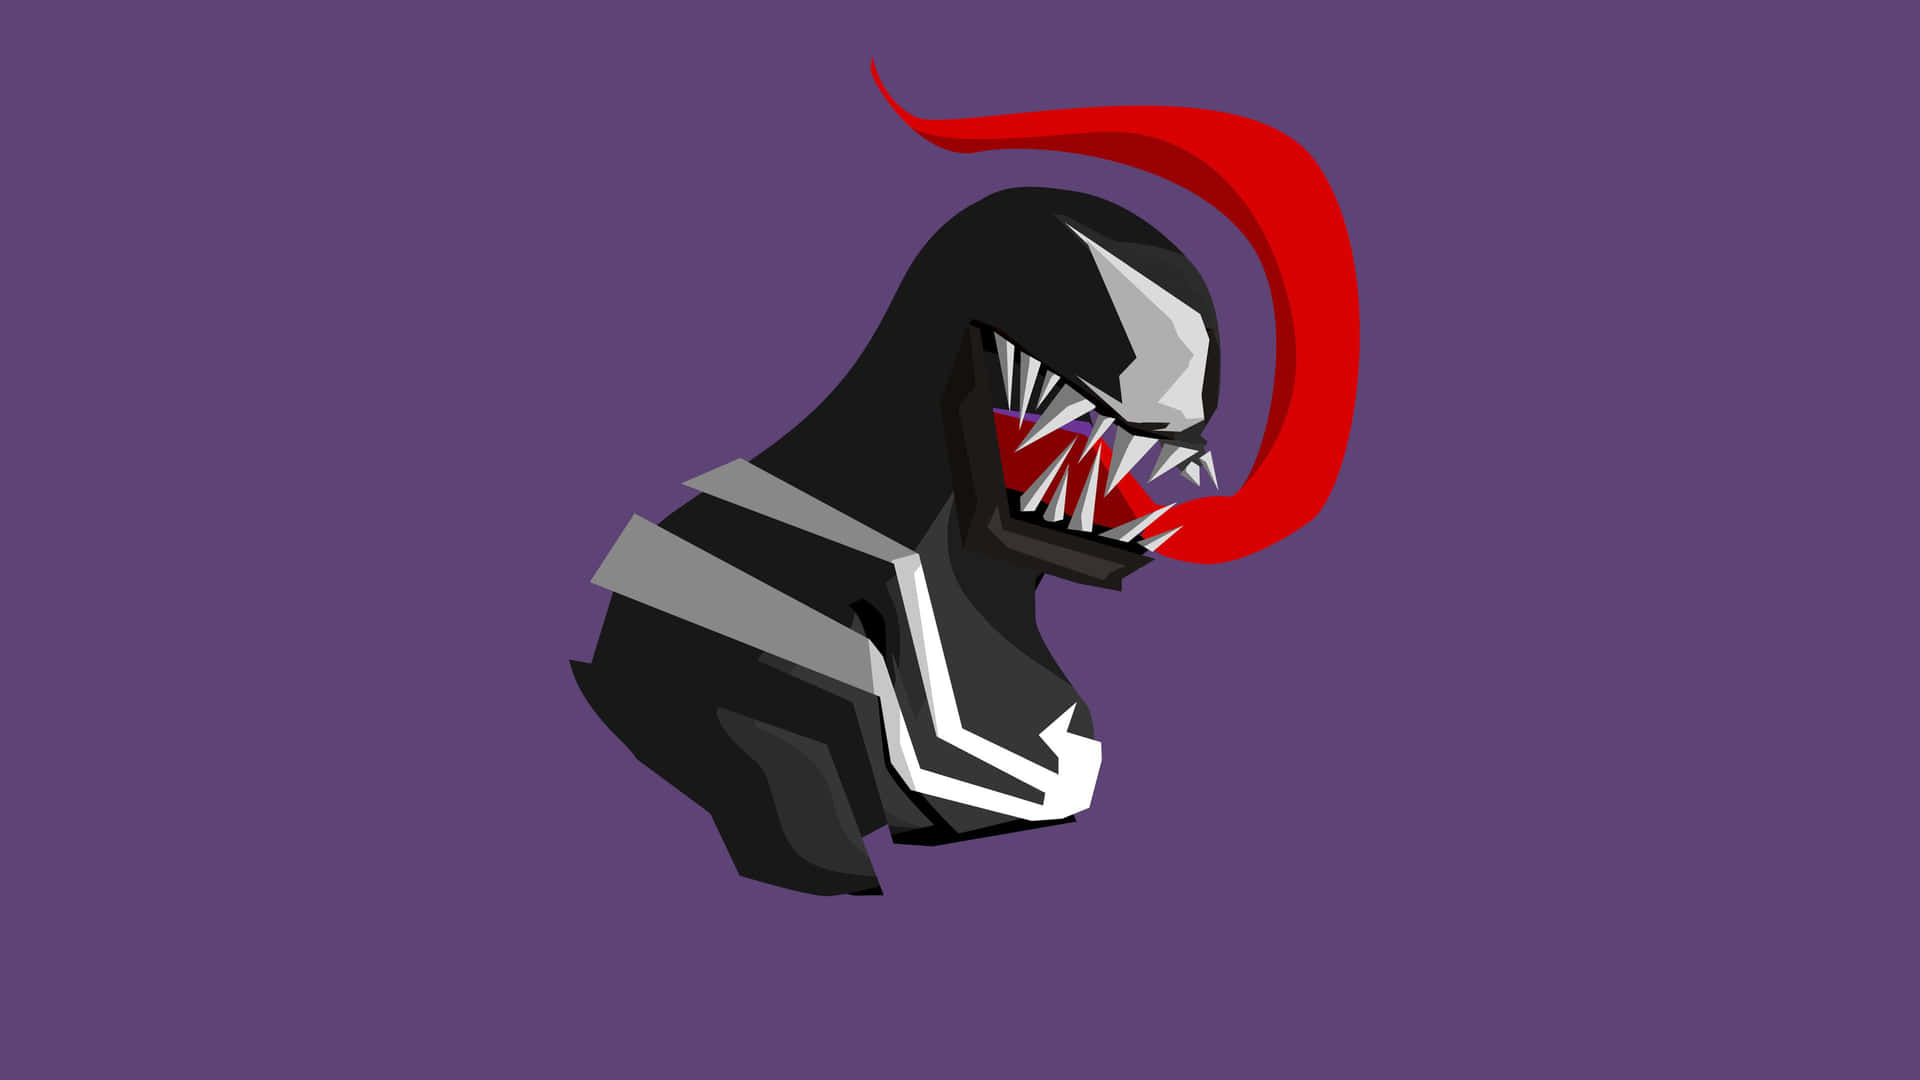 Unleashing Madness - Venom in Action Wallpaper